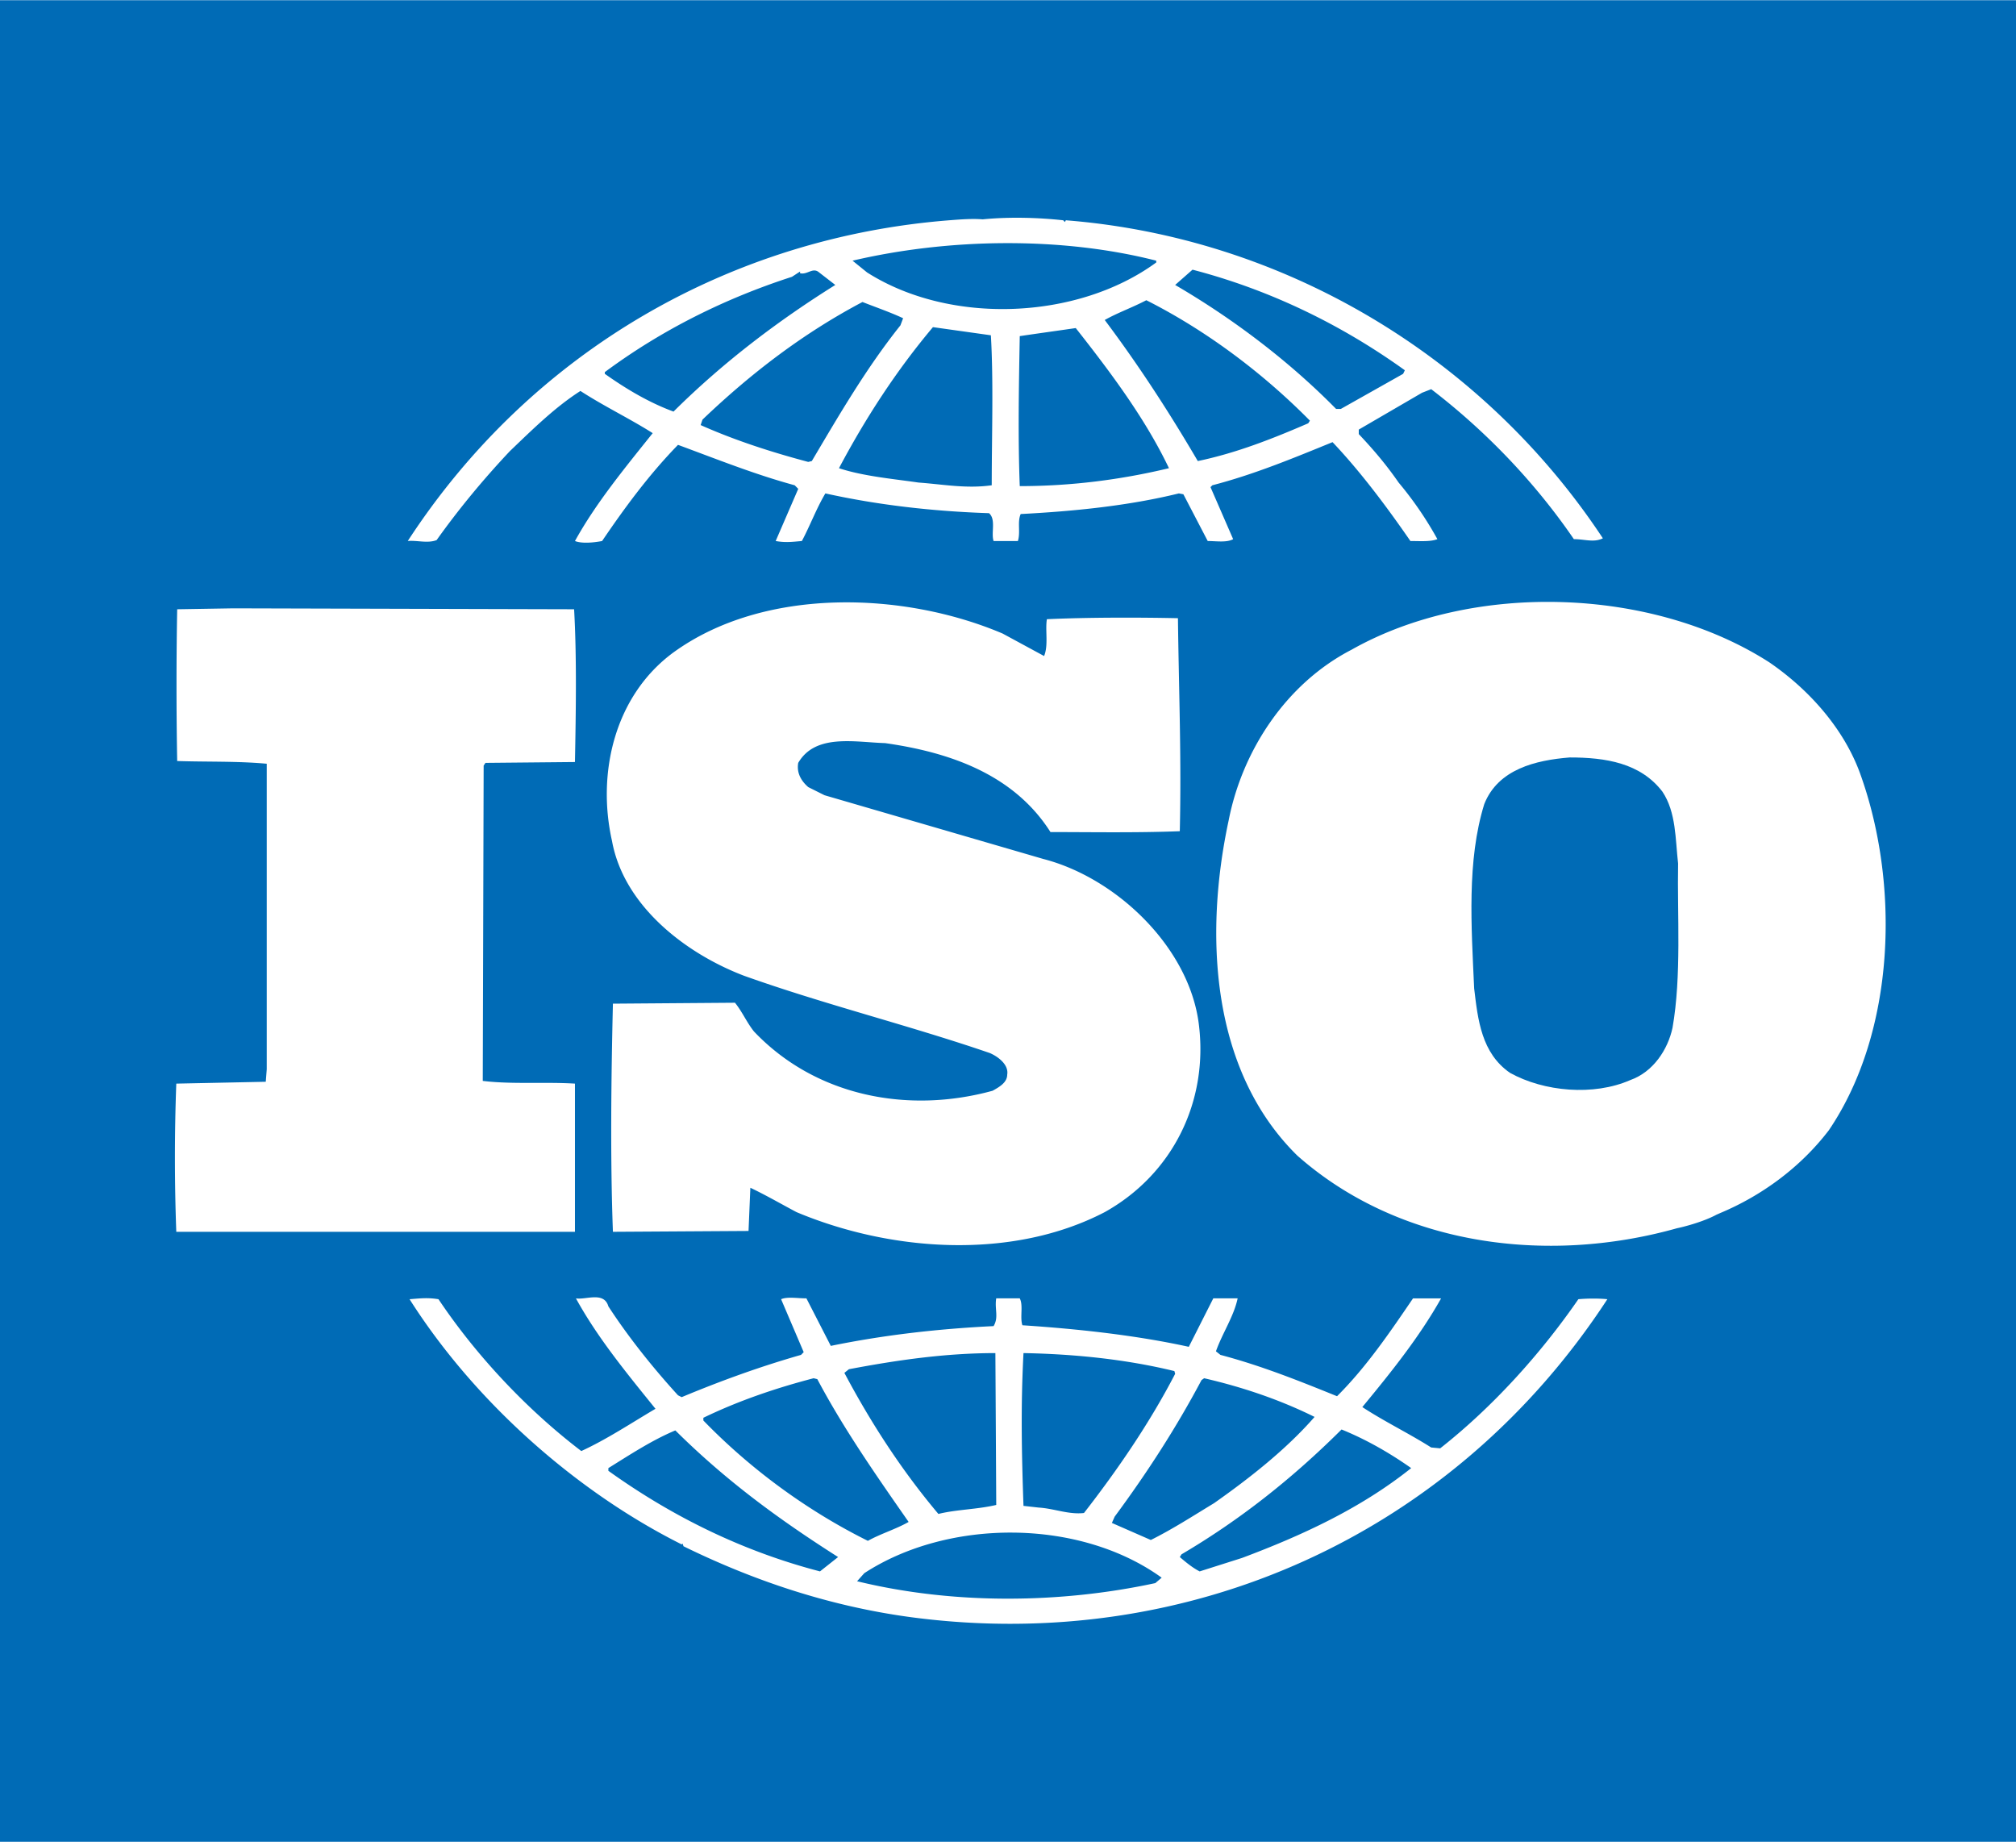 International Organization For Standardization (ISO) logo colors